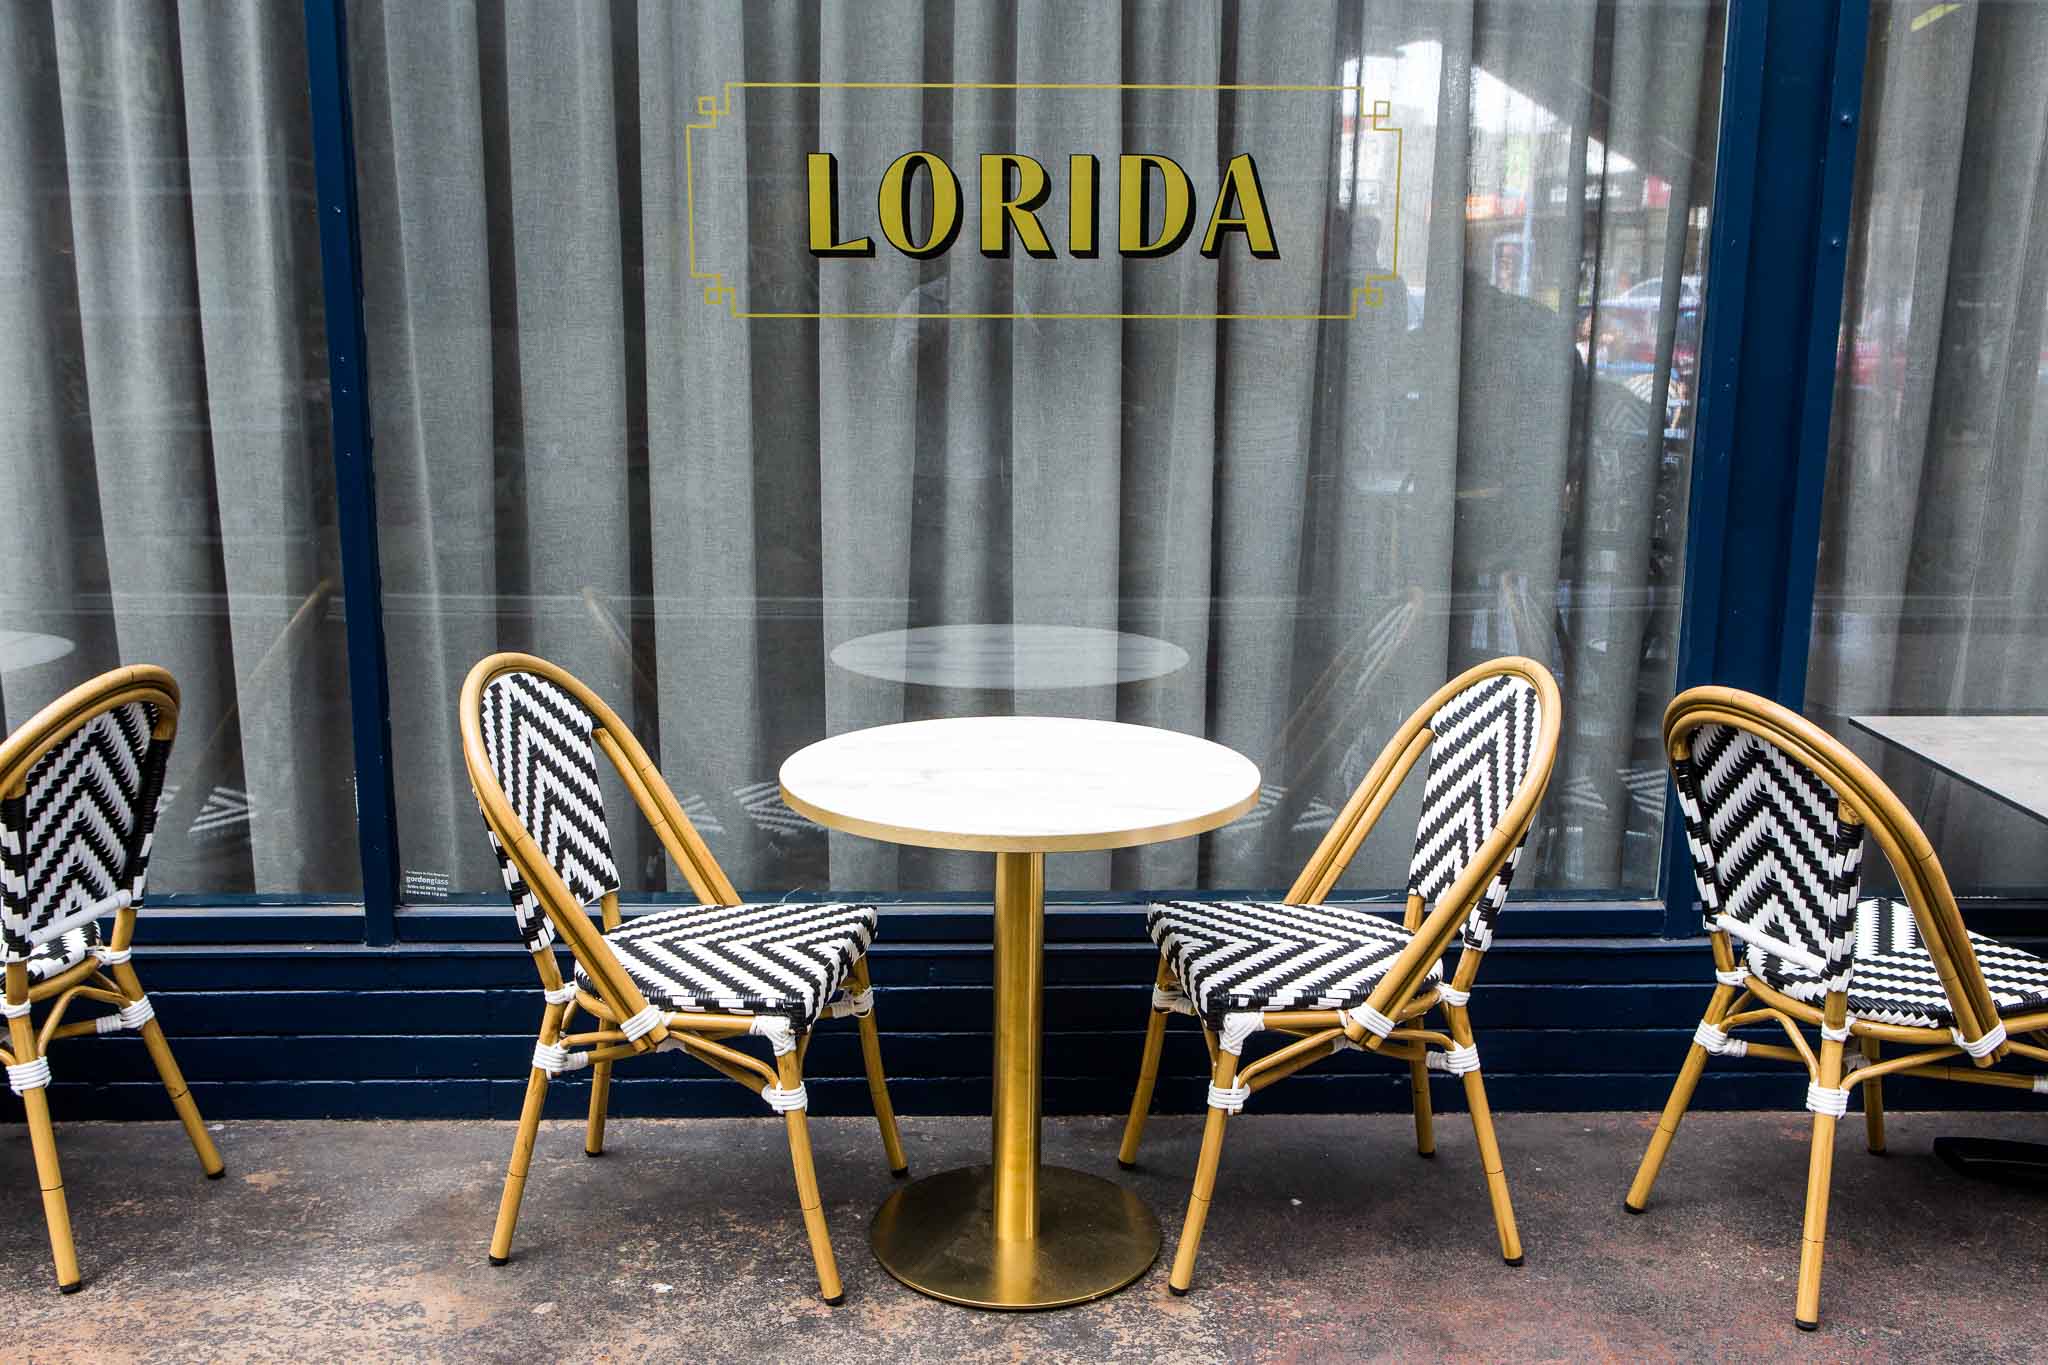 Lorida Greek Taverna In Main Street Mornington Once Inside This Bona Fid